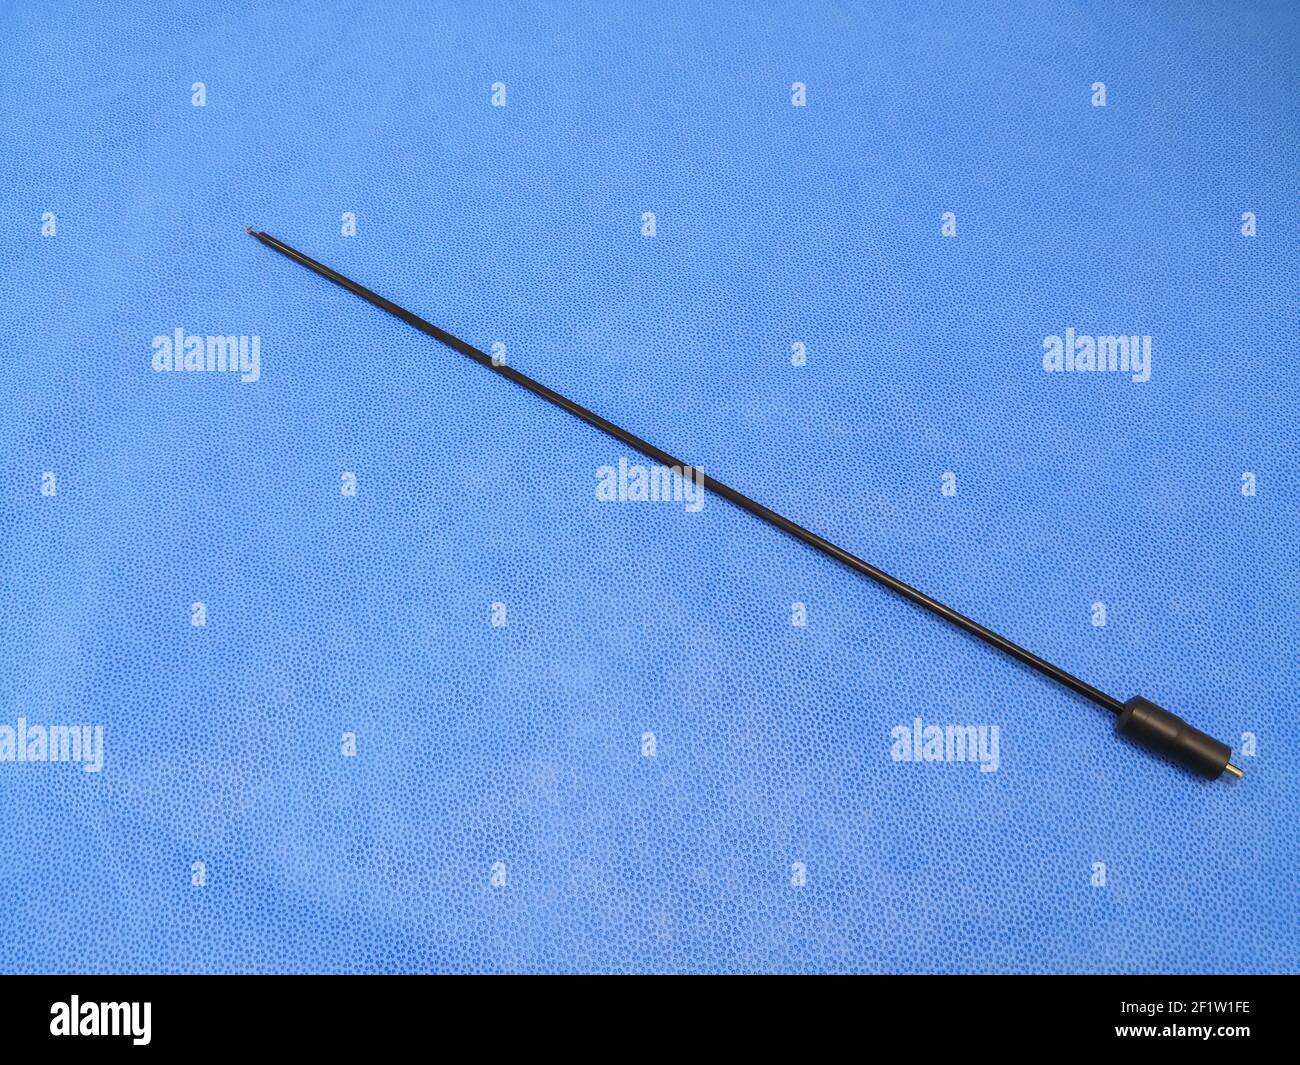 Closeup Image Of Medical Surgical Laparoscopic Hook Forceps Stock Photo